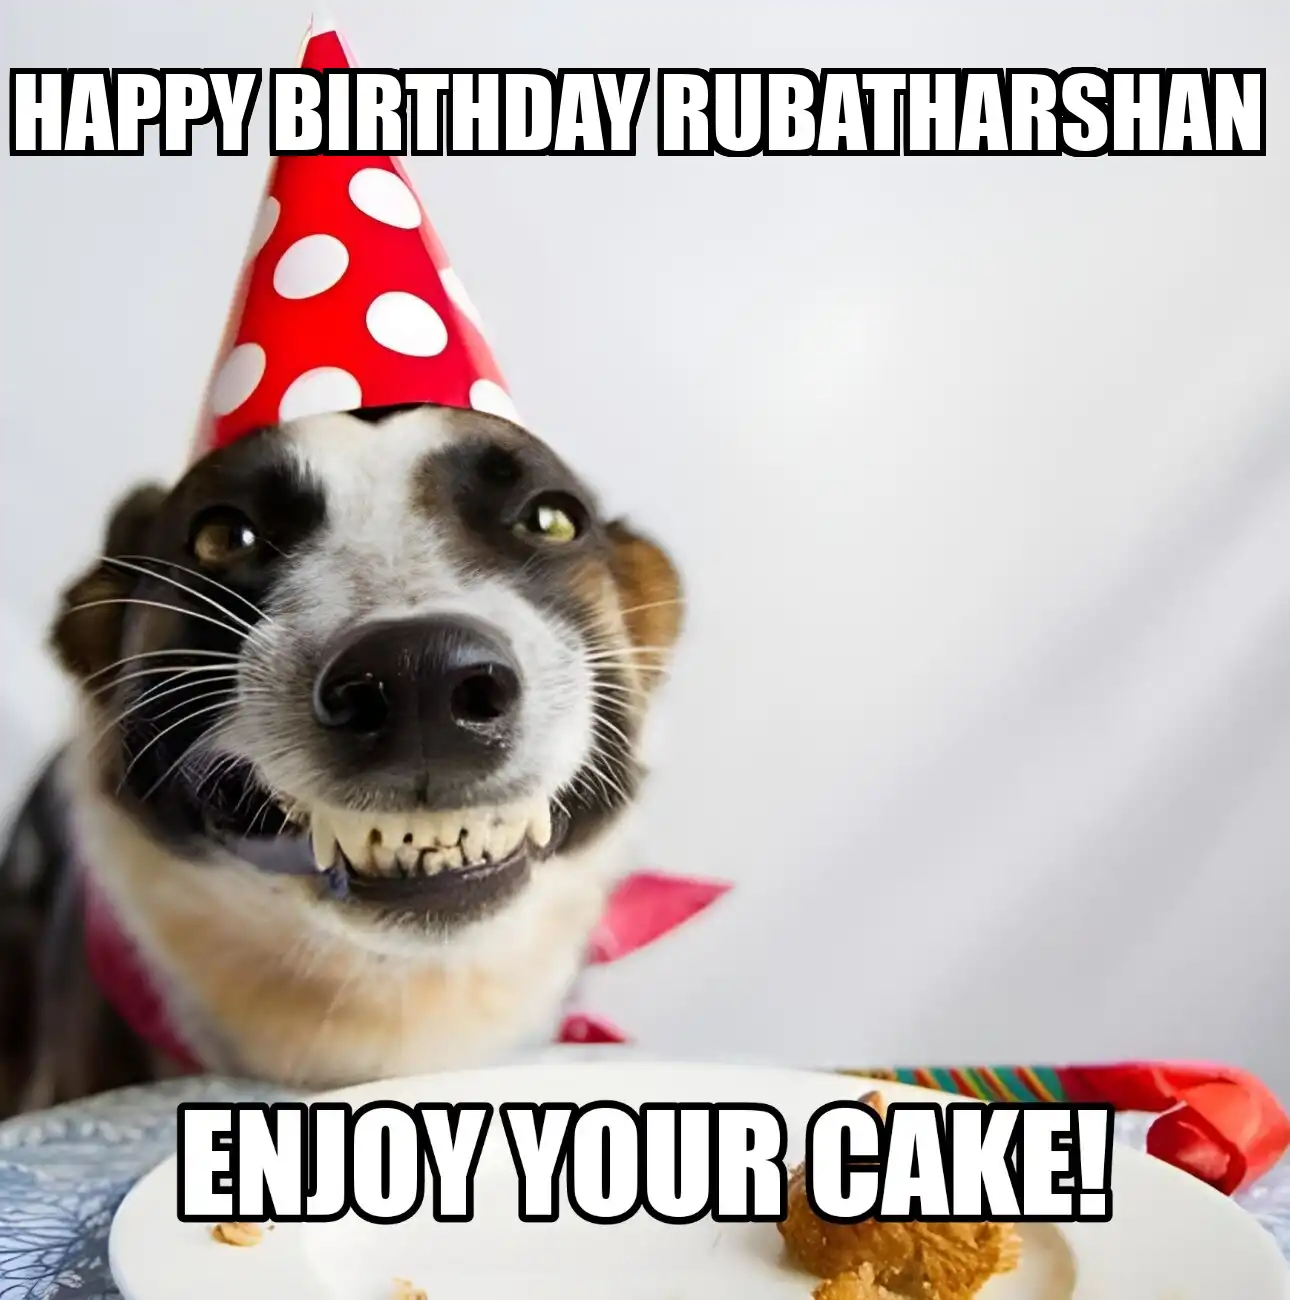 Happy Birthday Rubatharshan Enjoy Your Cake Dog Meme